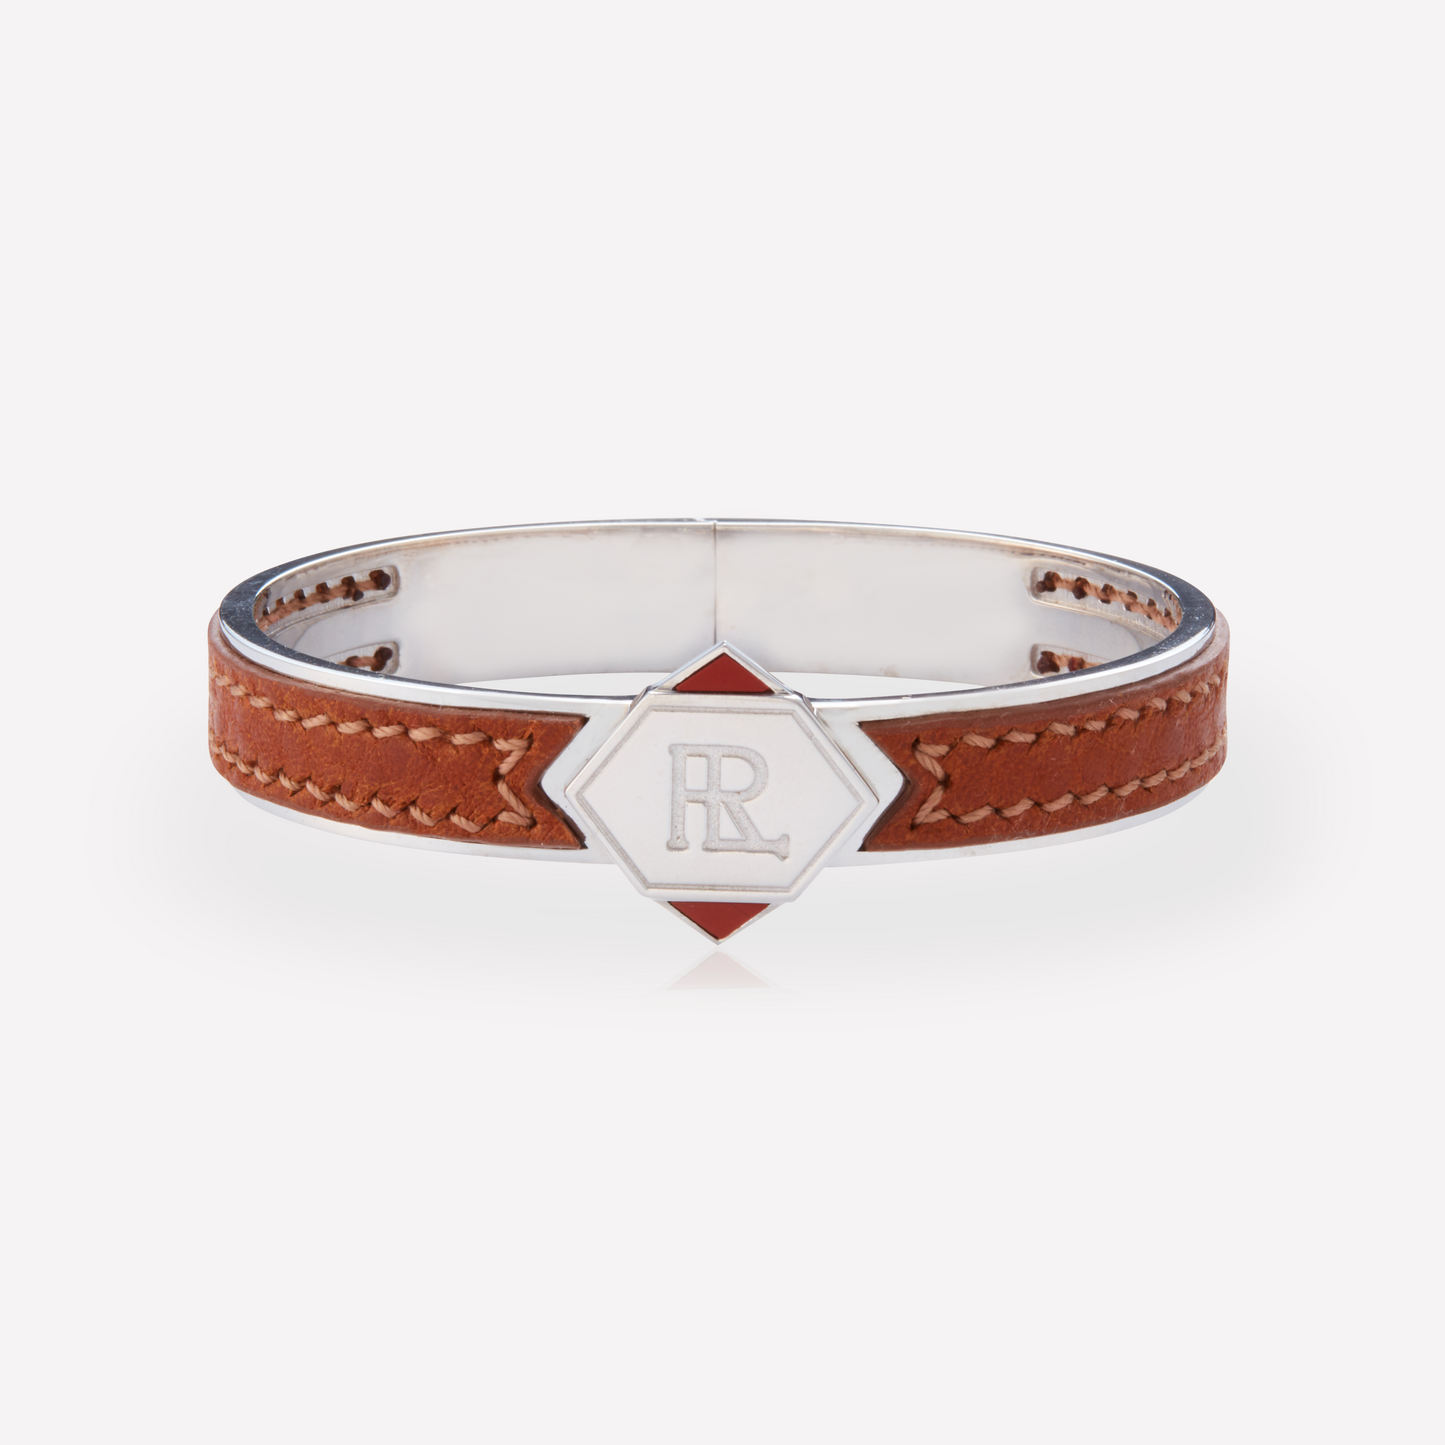 Twined Leather Bracelet, Large, Brown, Jasper